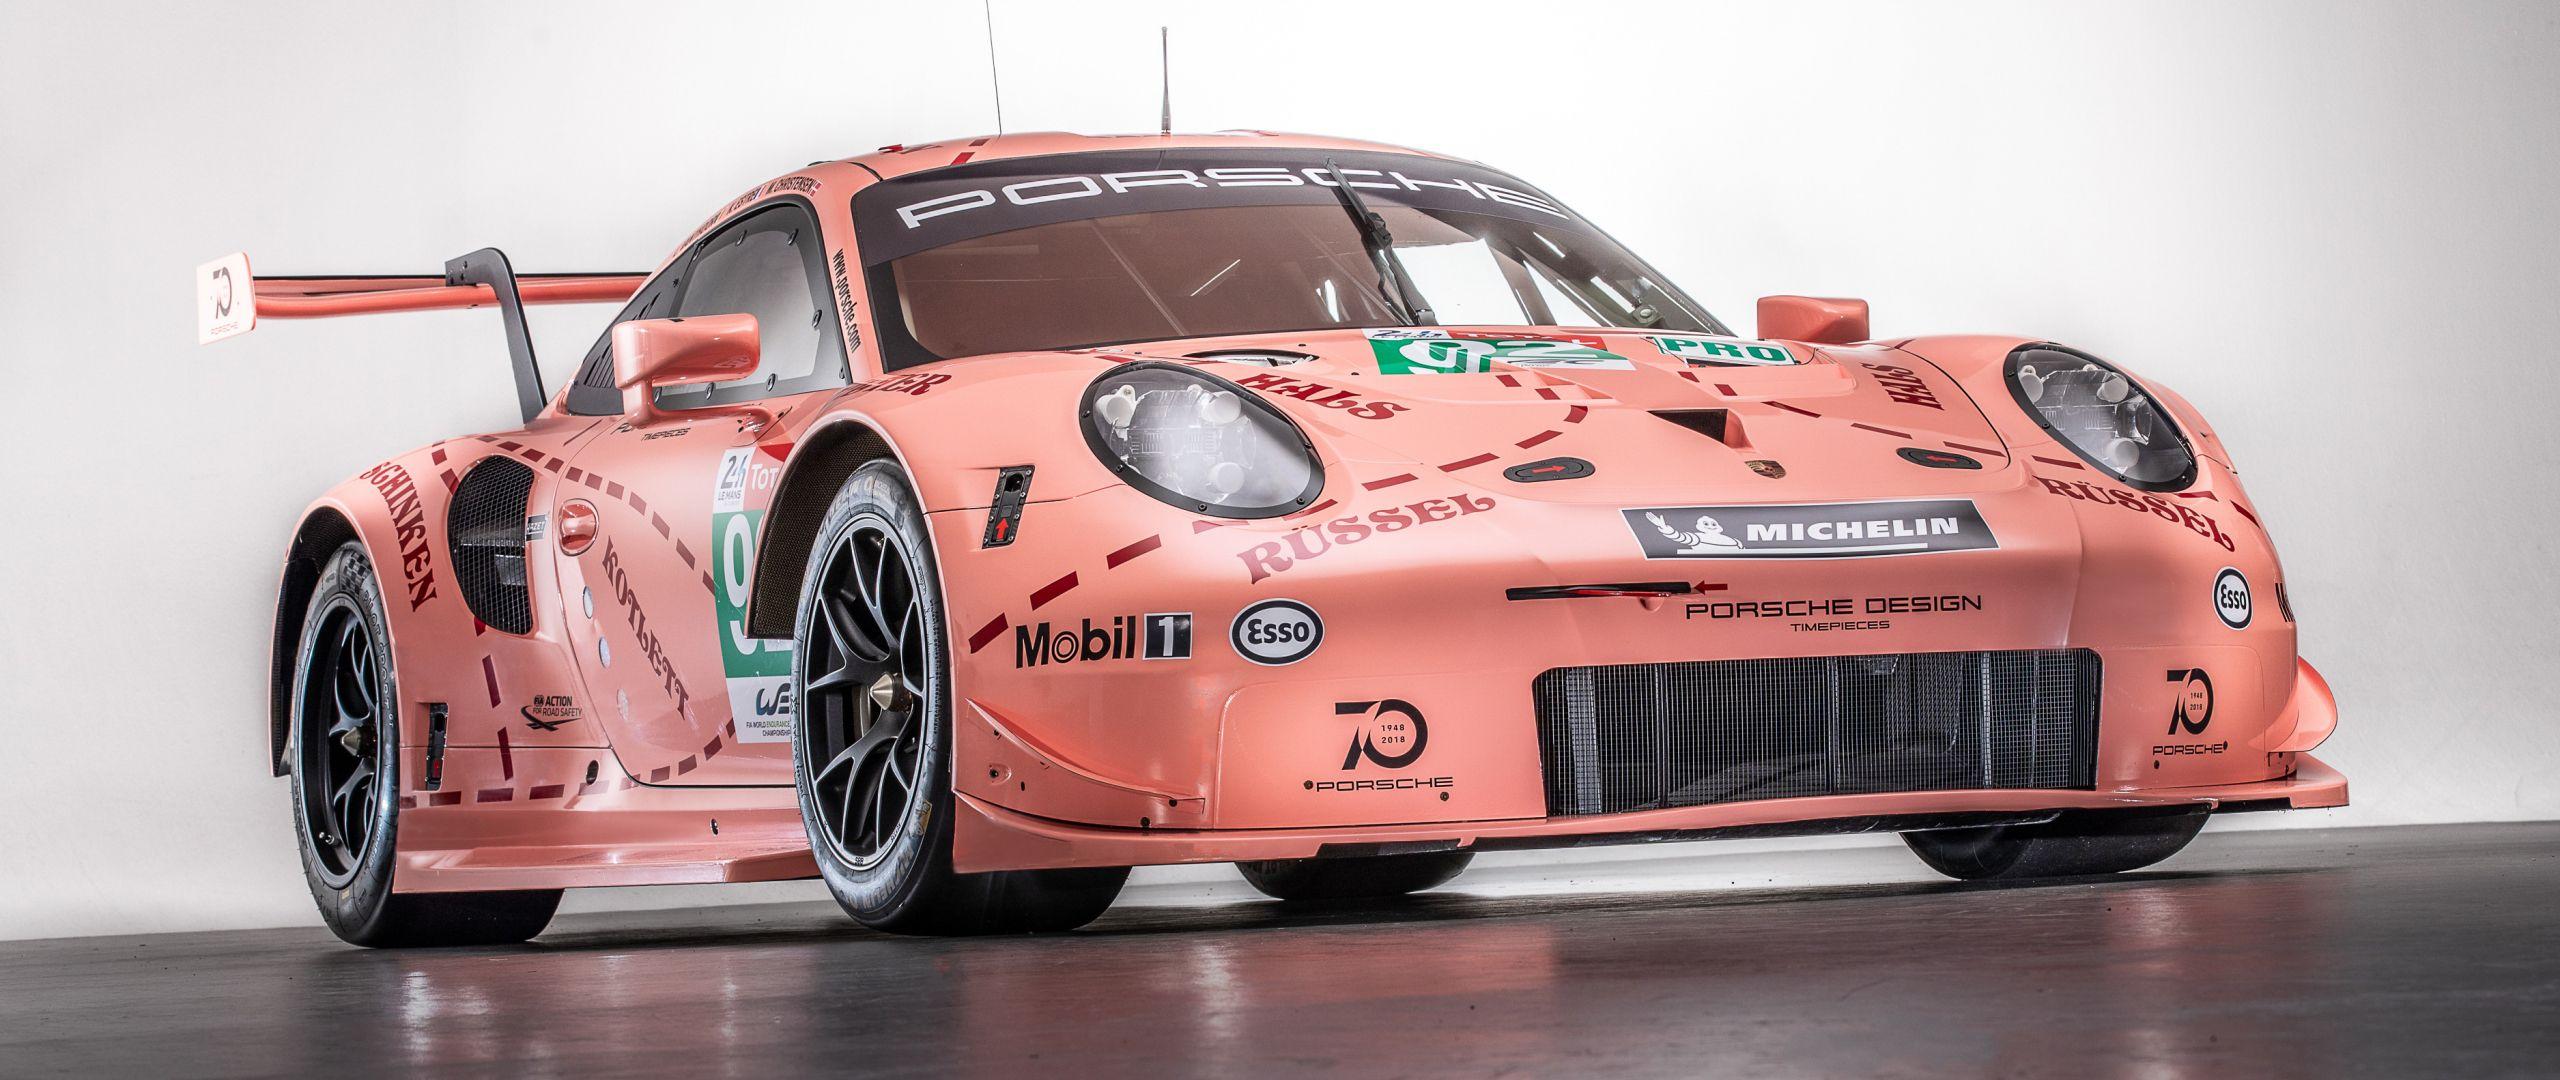 V2 rsr porsche design. Porsche 911 Pink. Porsche 911 RSR Fujimi. Porsche 911 Pink ливрея. Порш гоночный розовый.